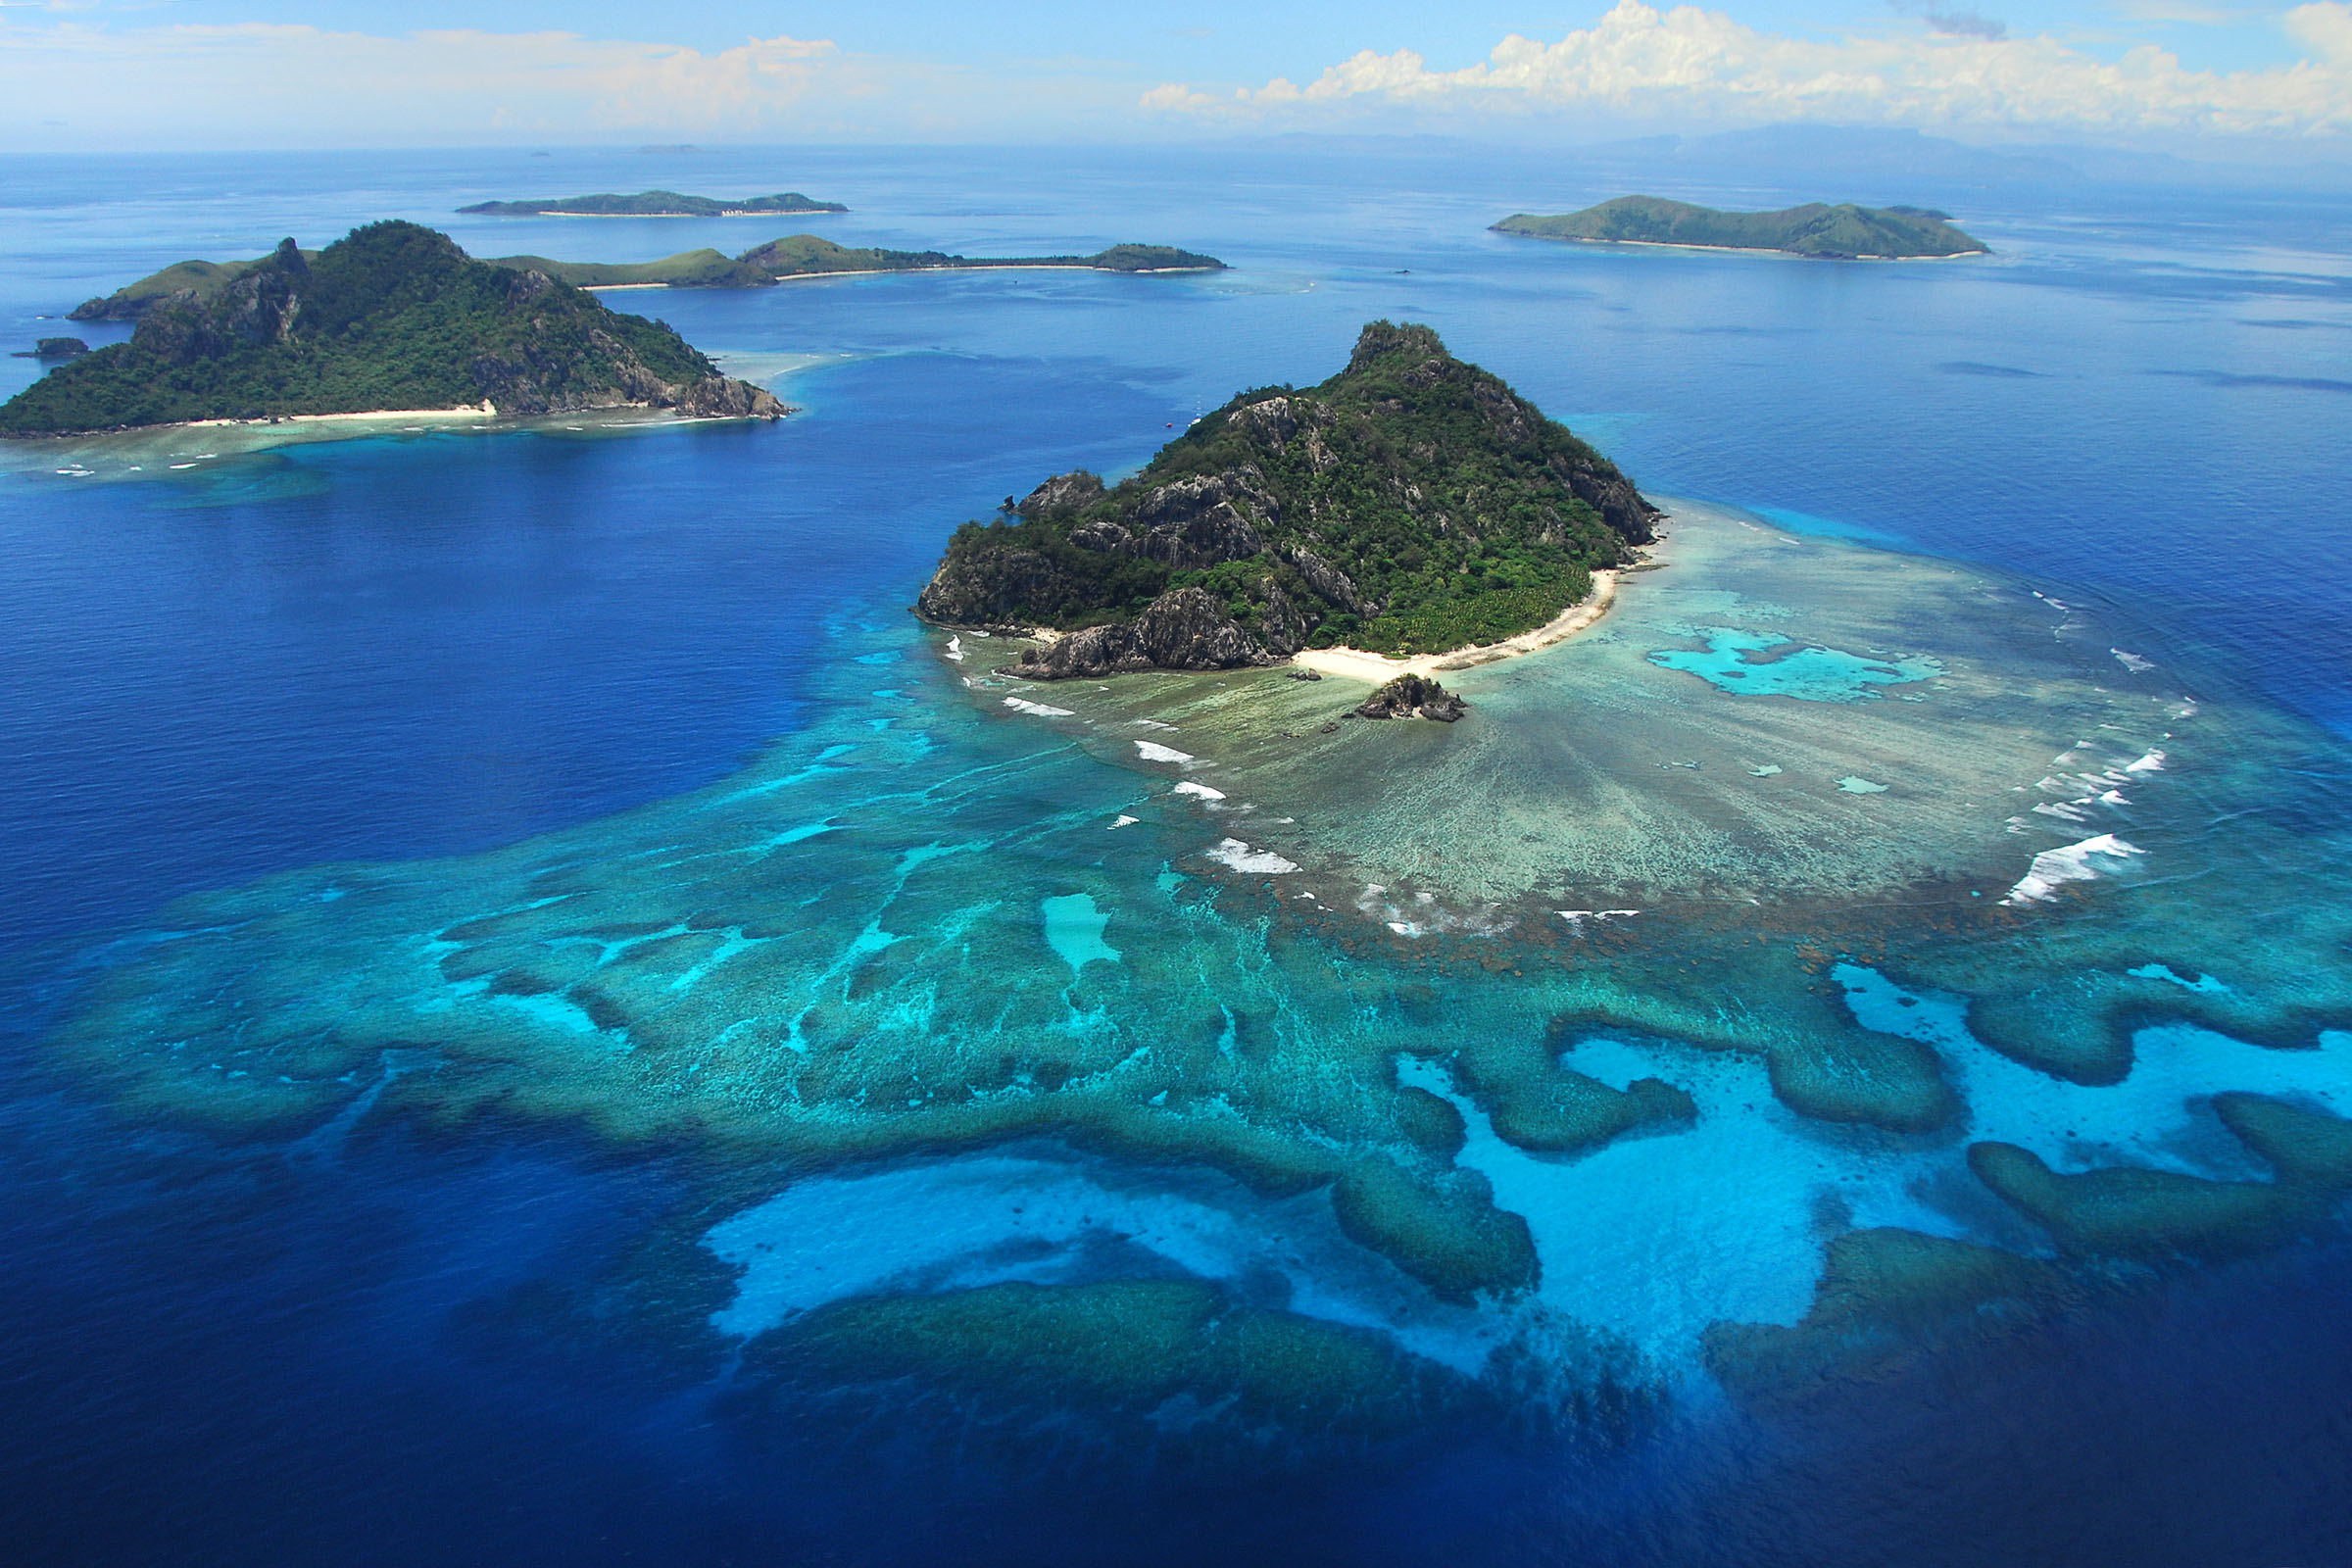 Крупнейшие архипелаги тихого океана. Фиджи Маманука. Остров Фиджи. Архипелаг Фиджи. Монурики, Фиджи.